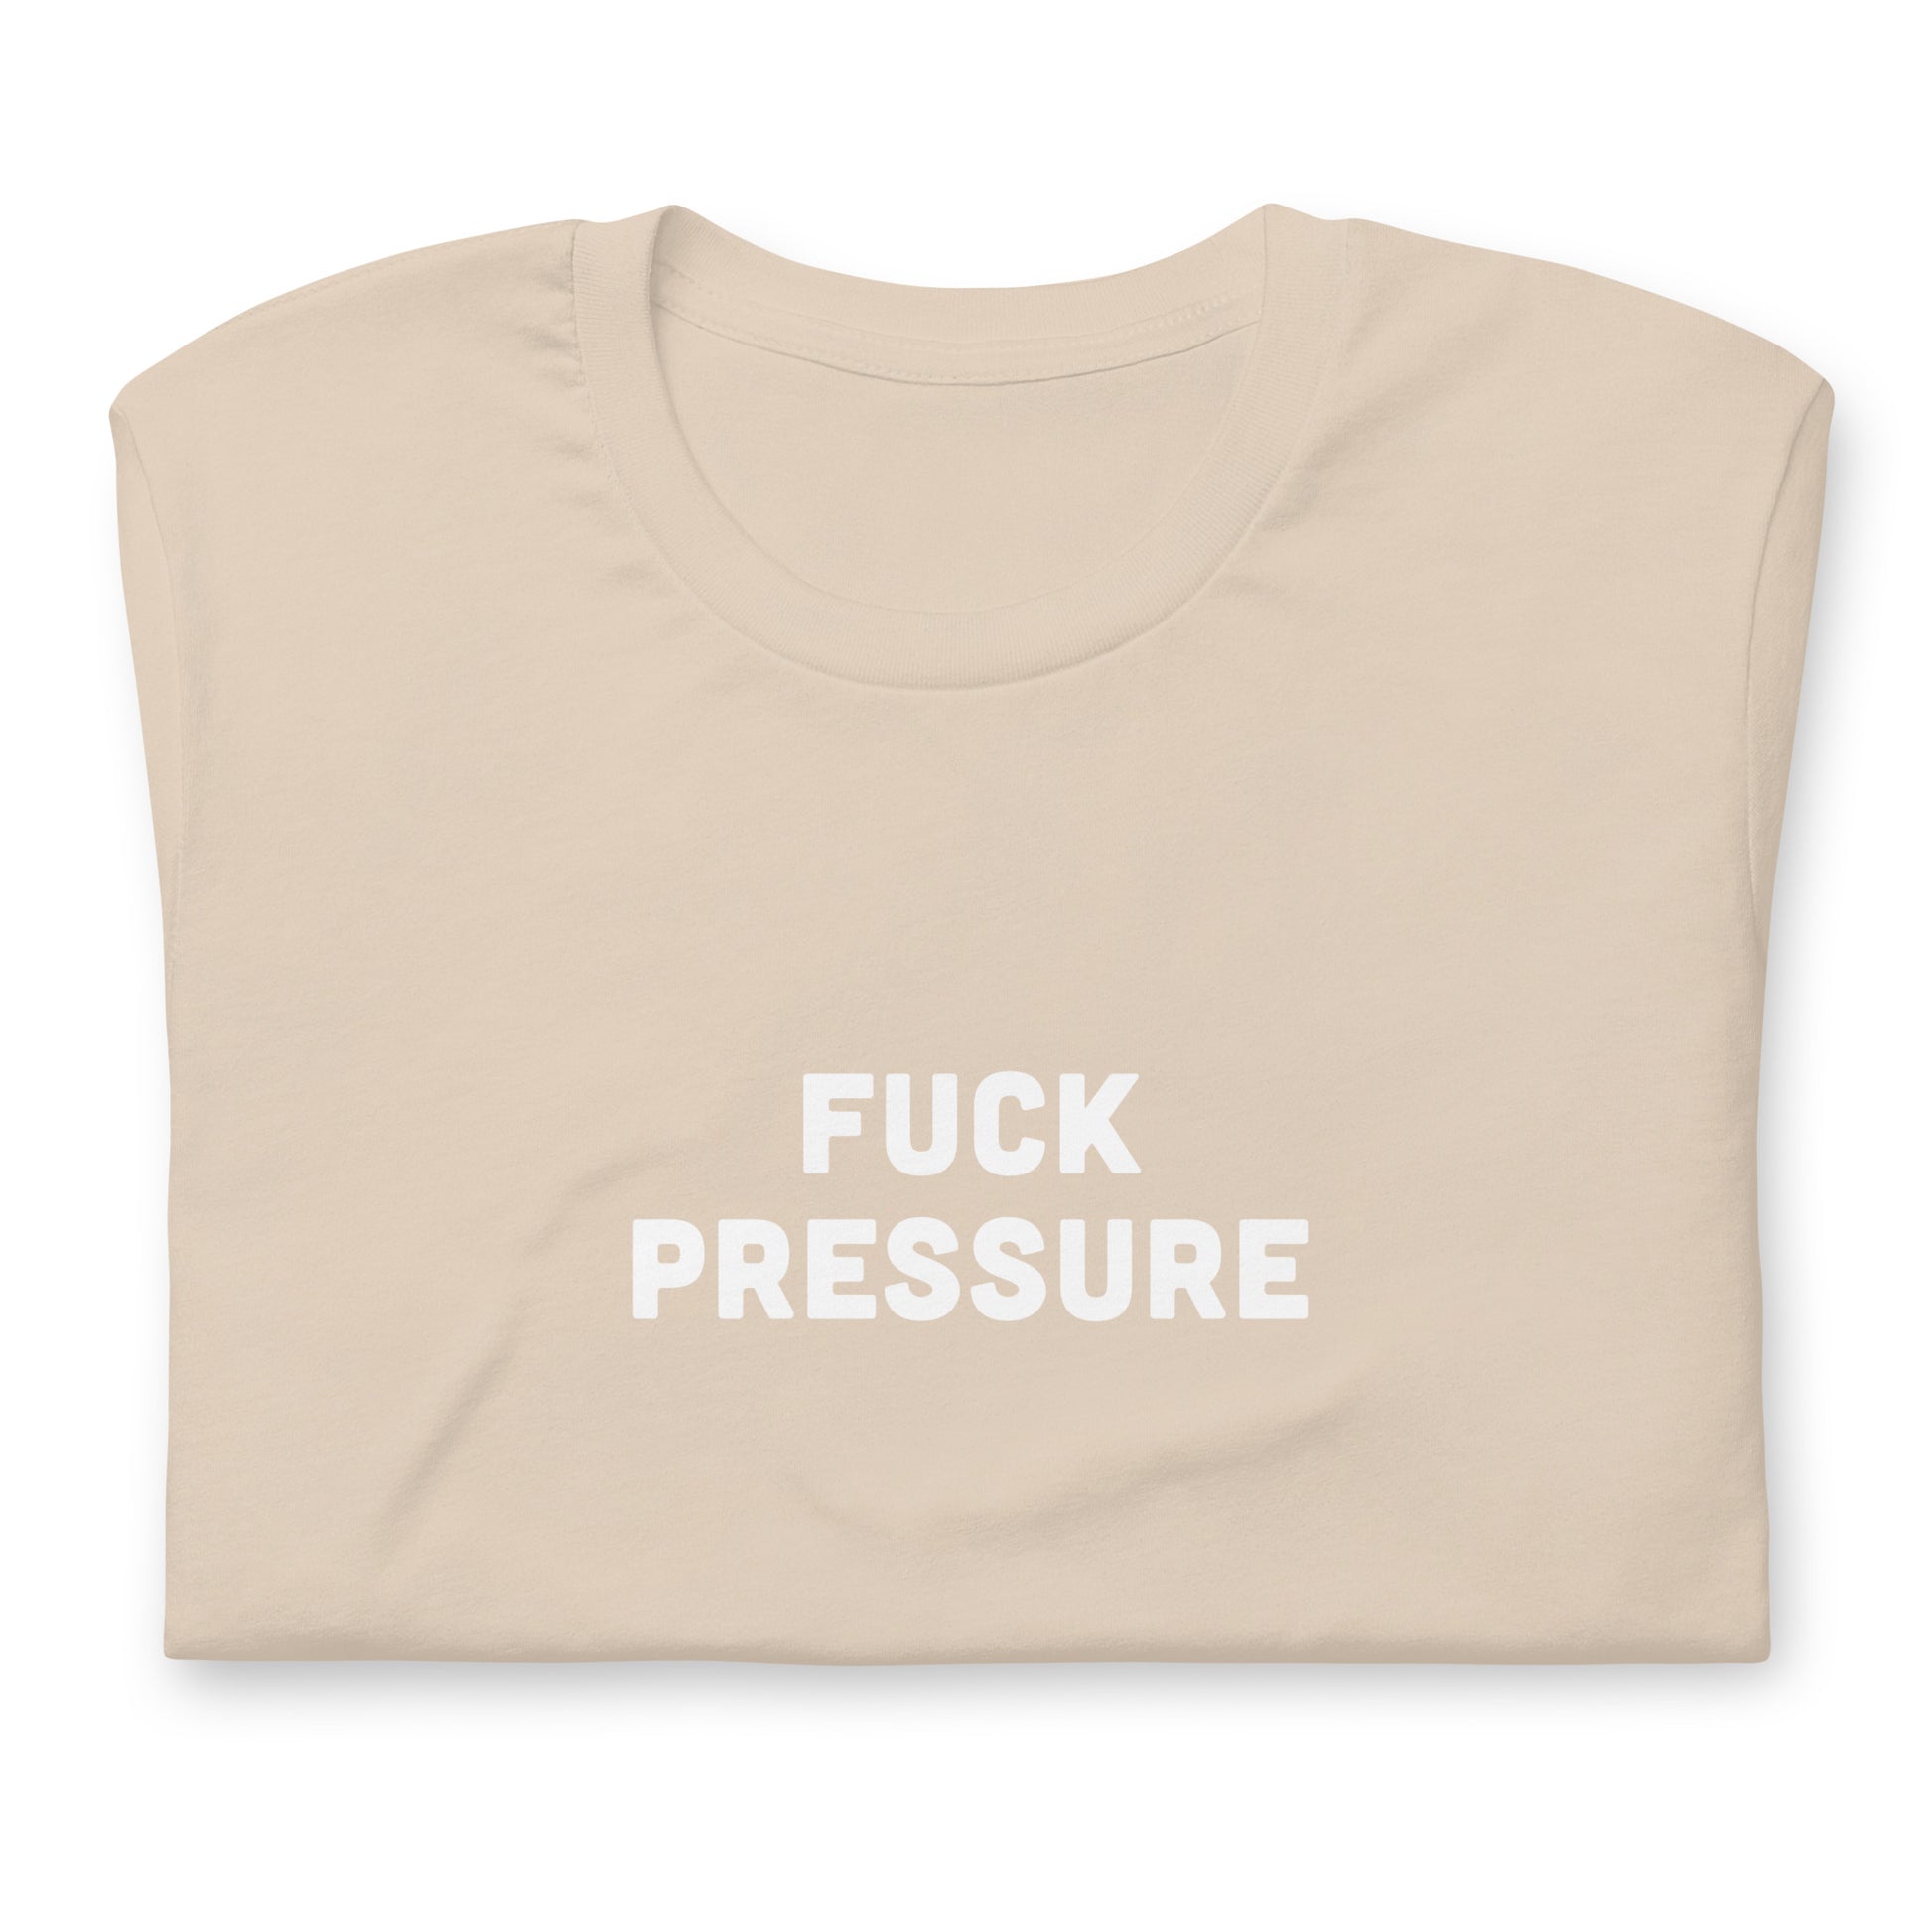 Fuck Pressure T-Shirt Size L Color Asphalt